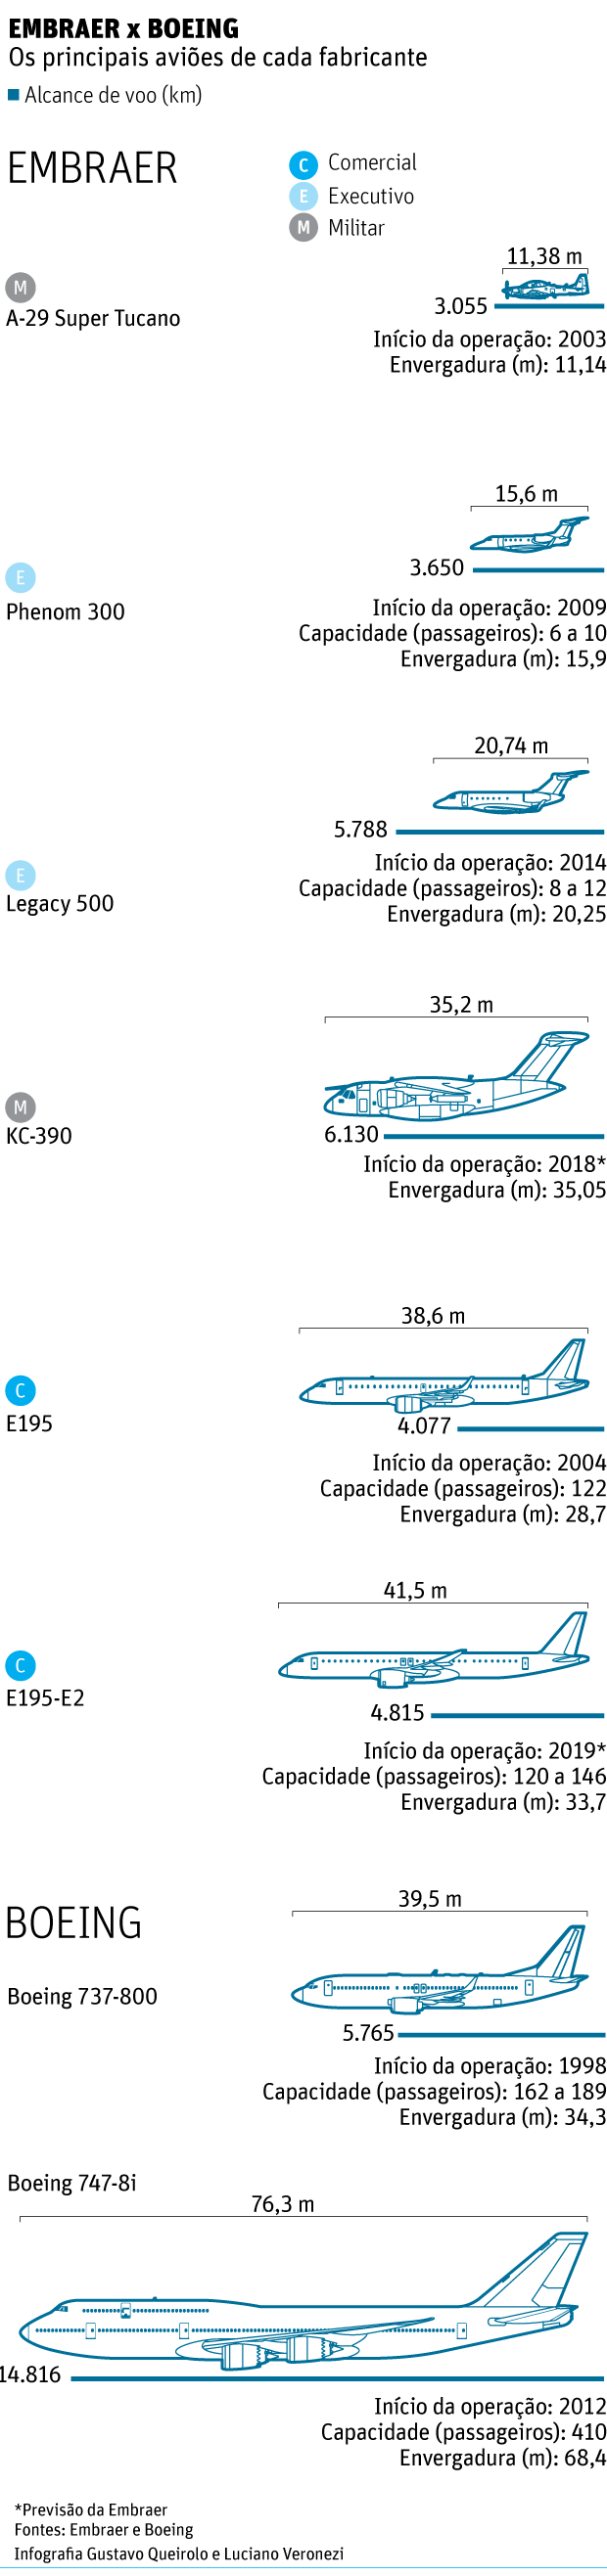 Embraer Avies - Folhapress